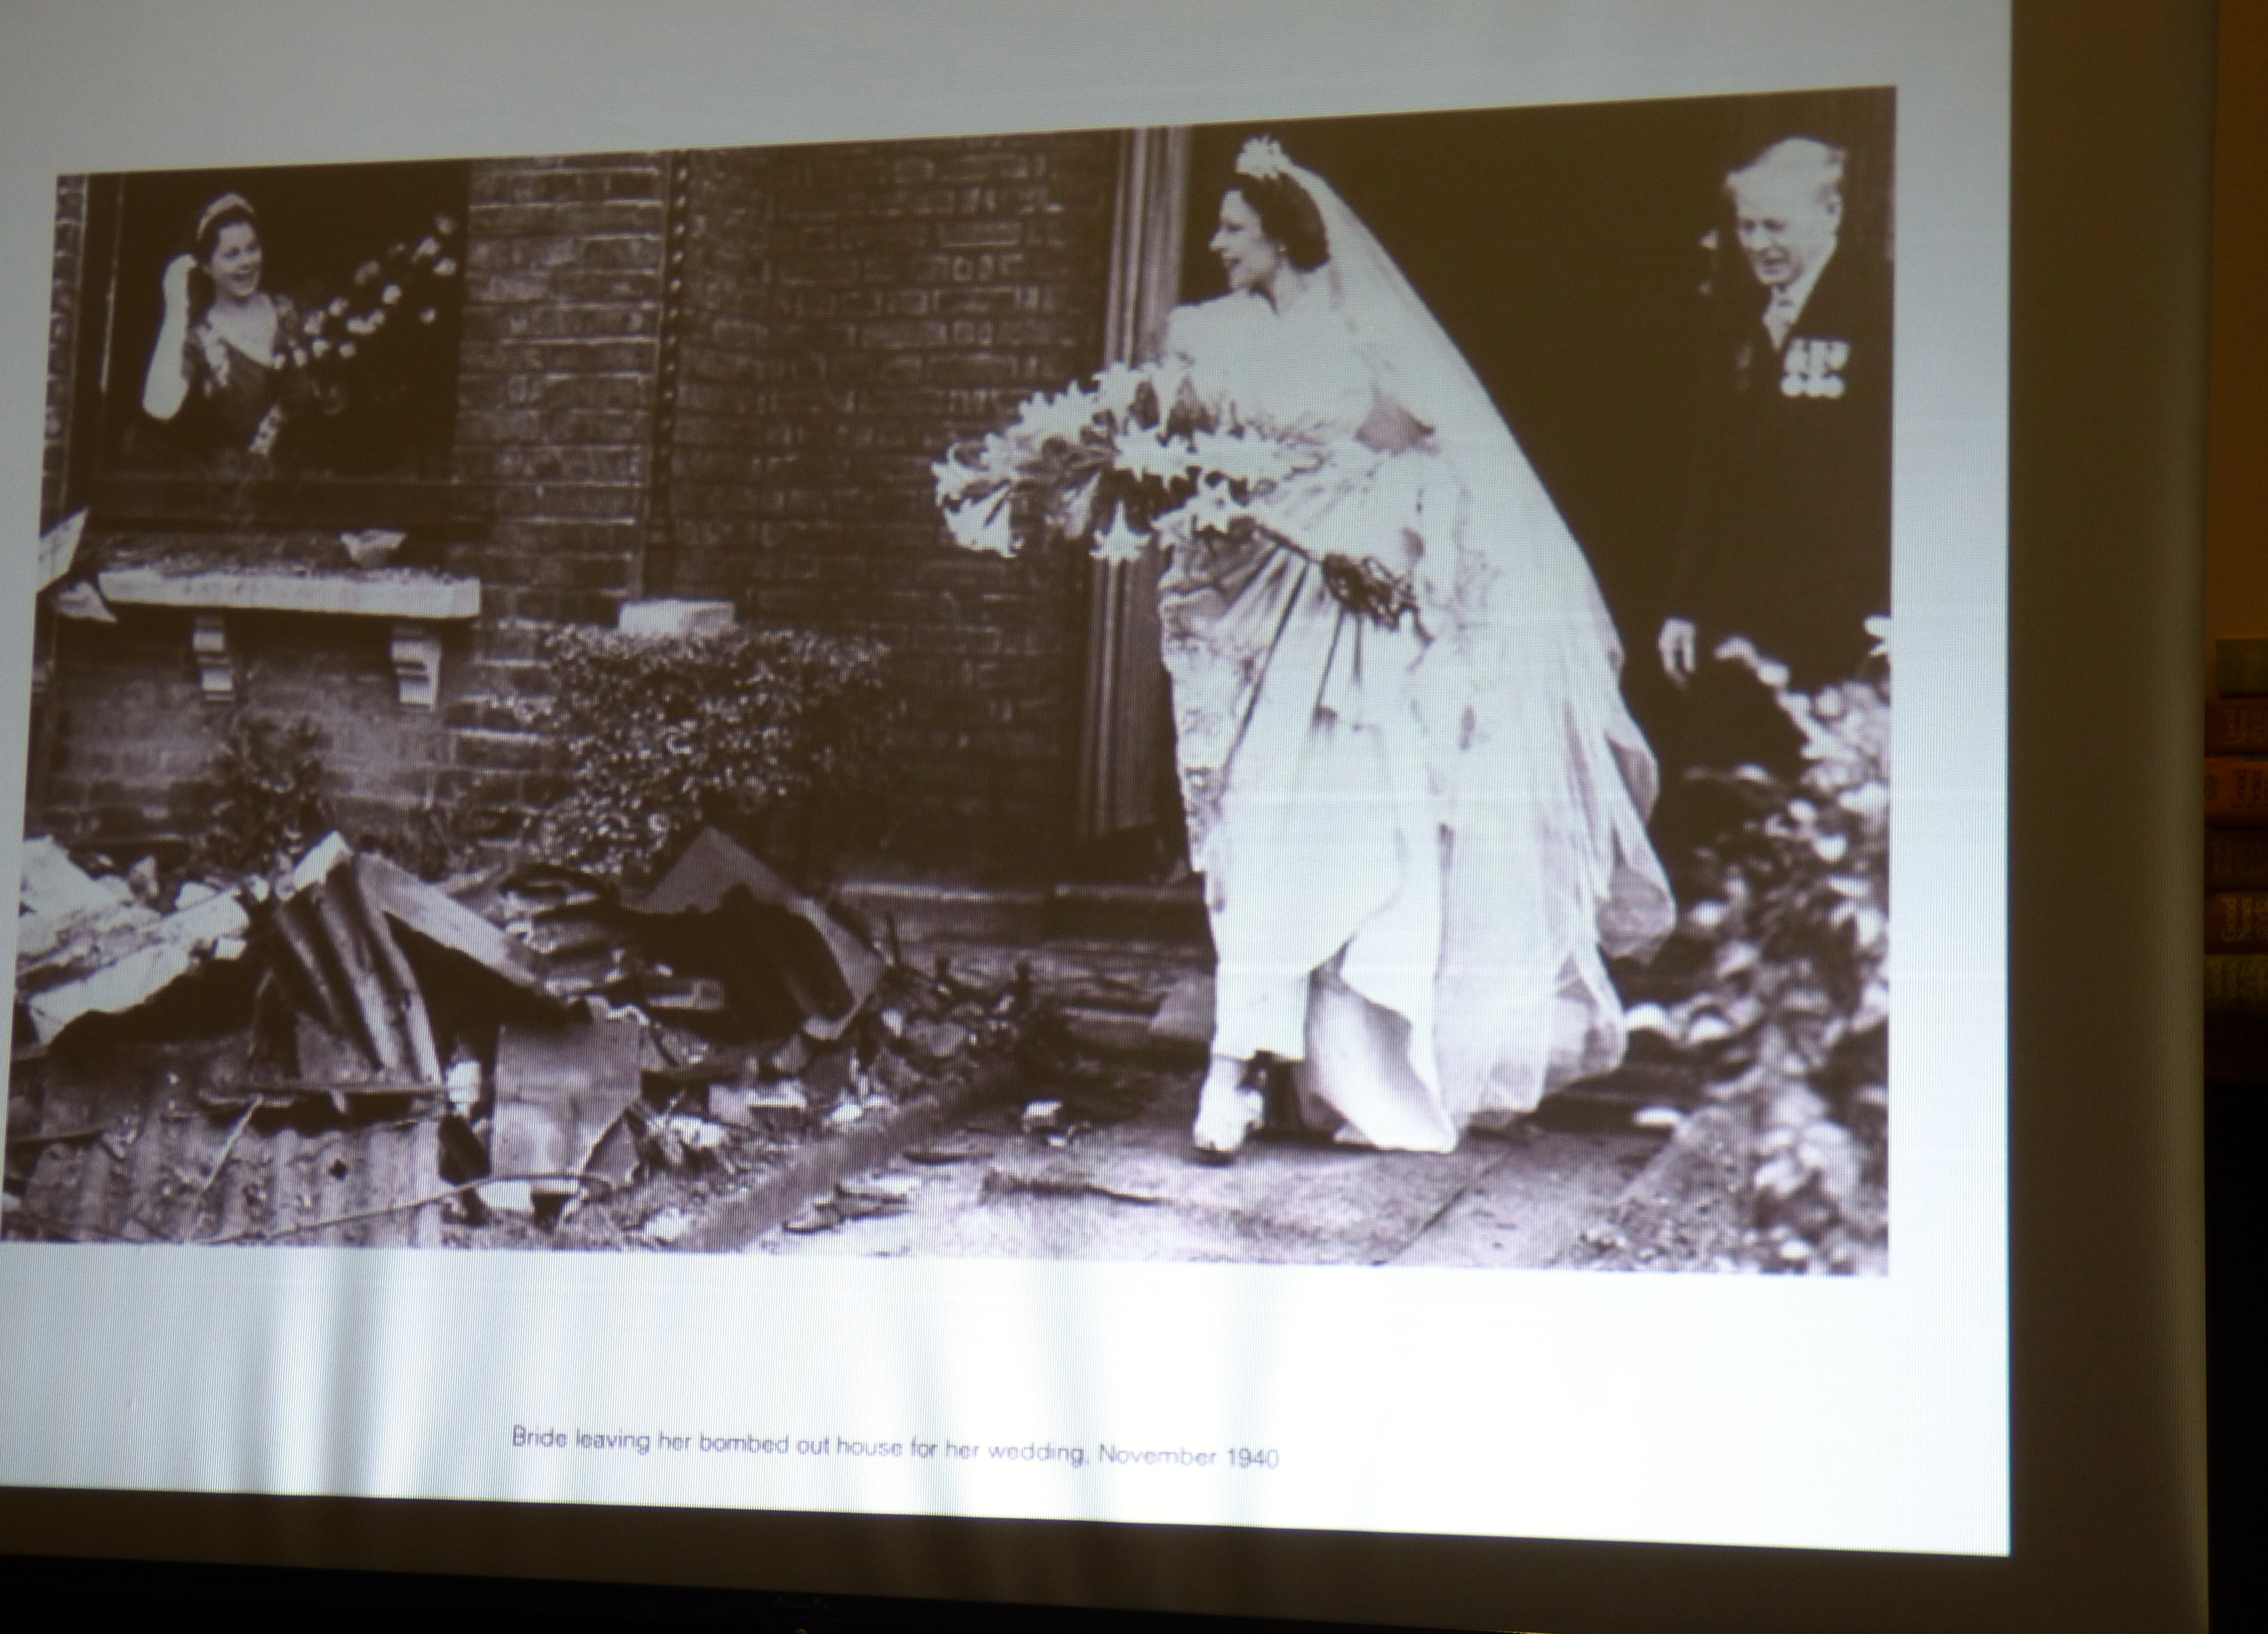 slide showing a bride leaving her bombed out house gor her wedding, November 1940